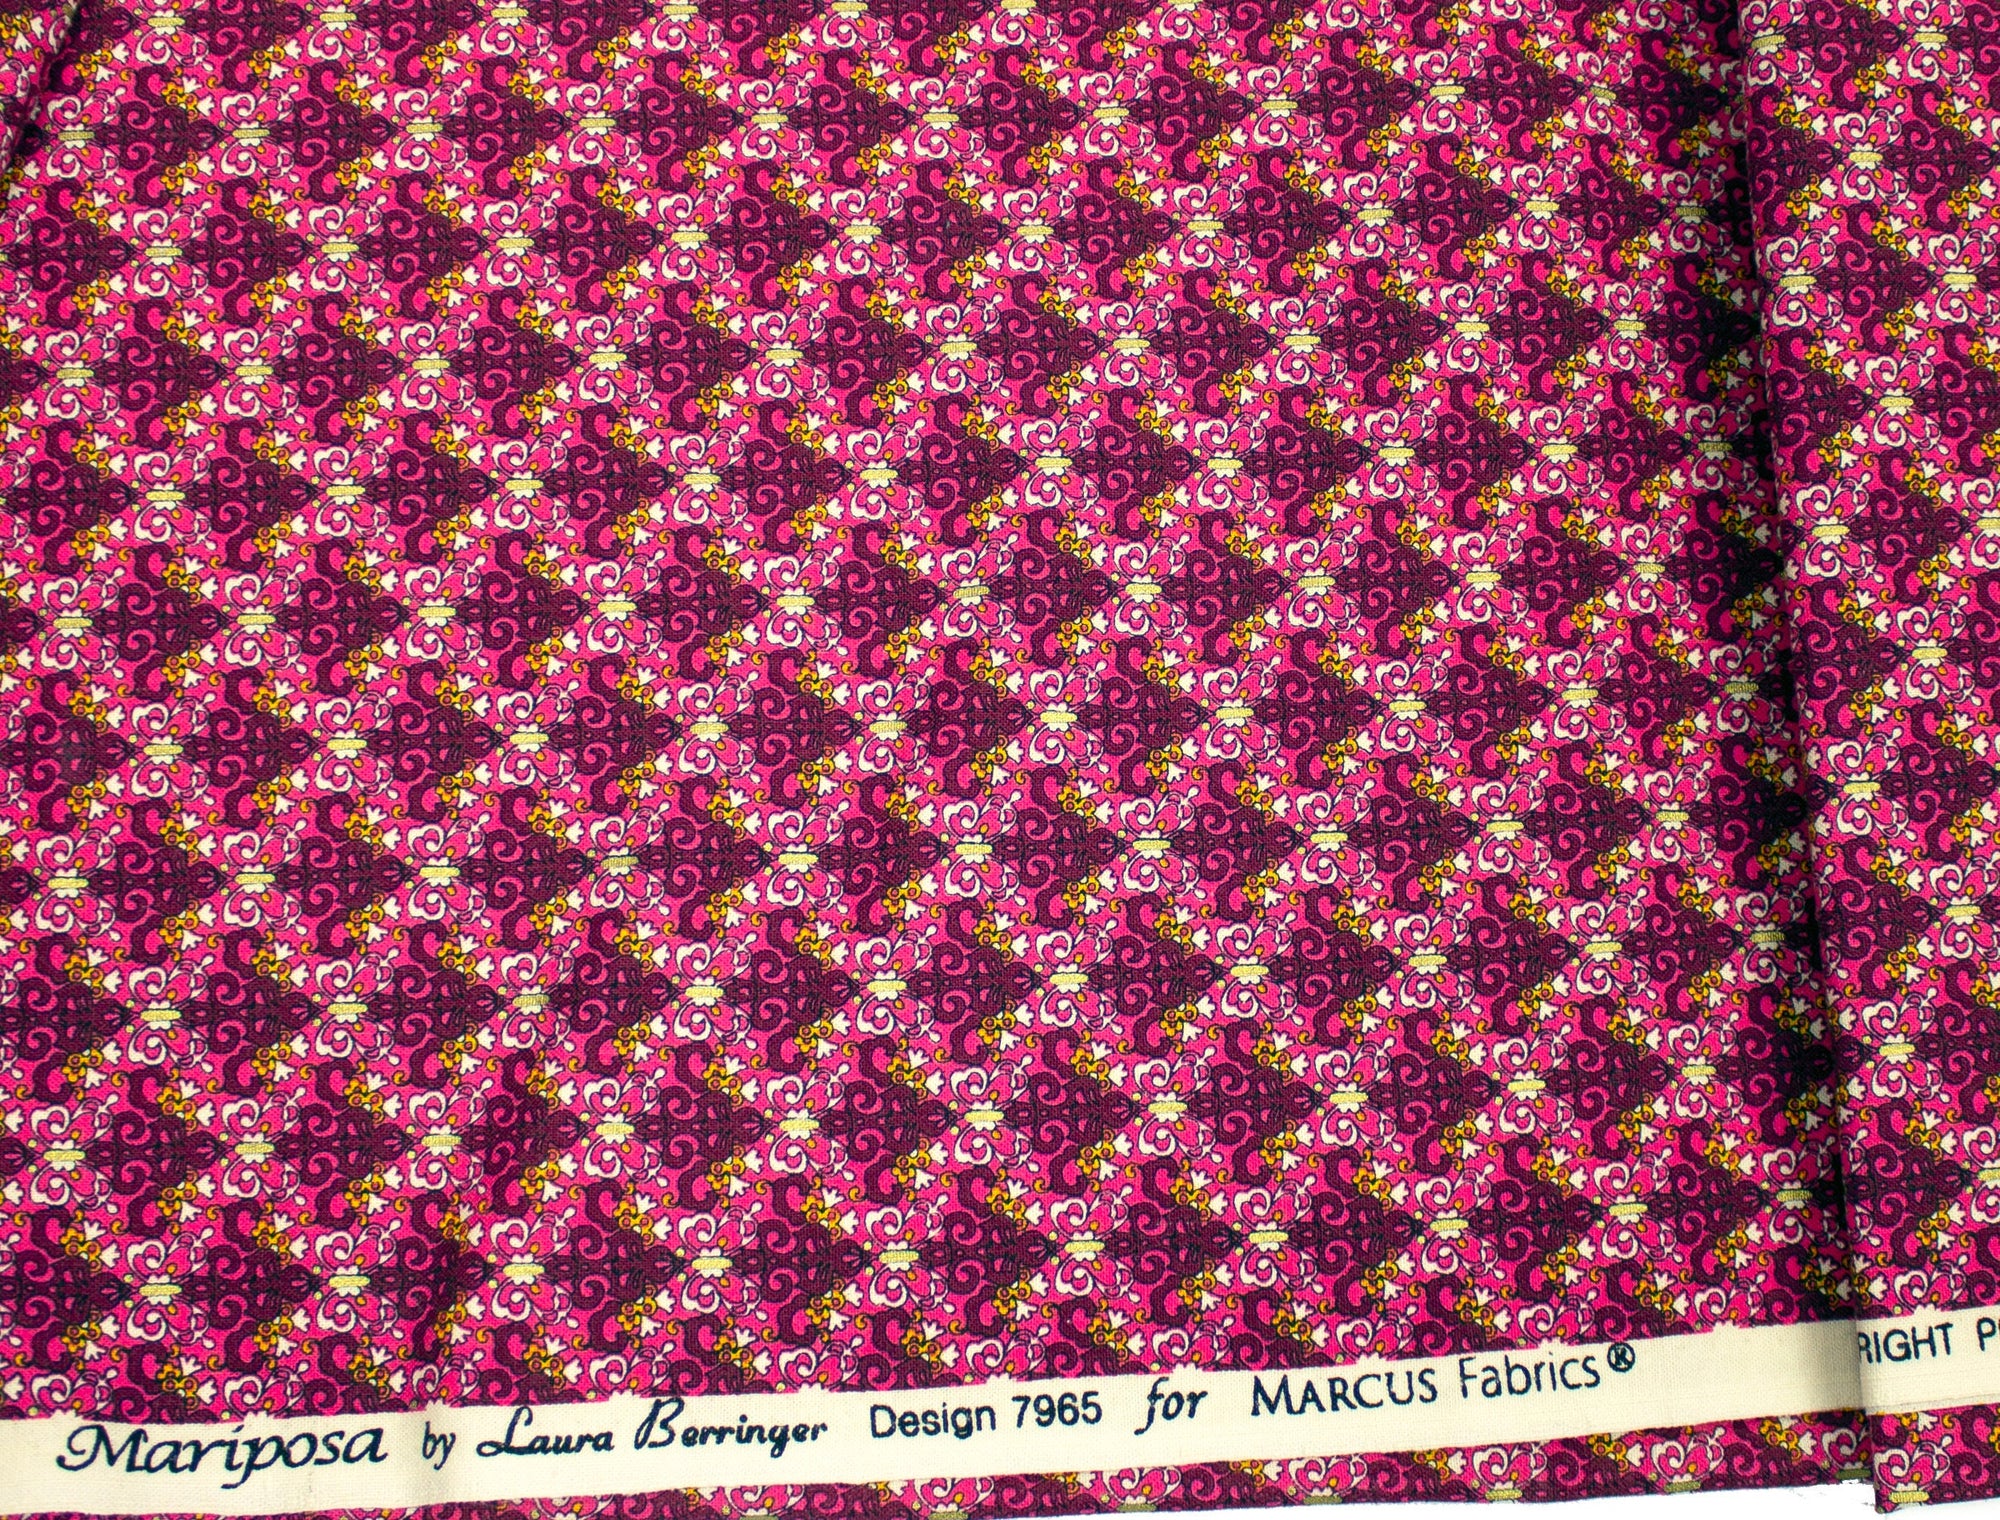 Vintage Fabric Cotton Print "Mariposa" by Laura Berringer Dark Purple Pink - Measures 43" x 40"